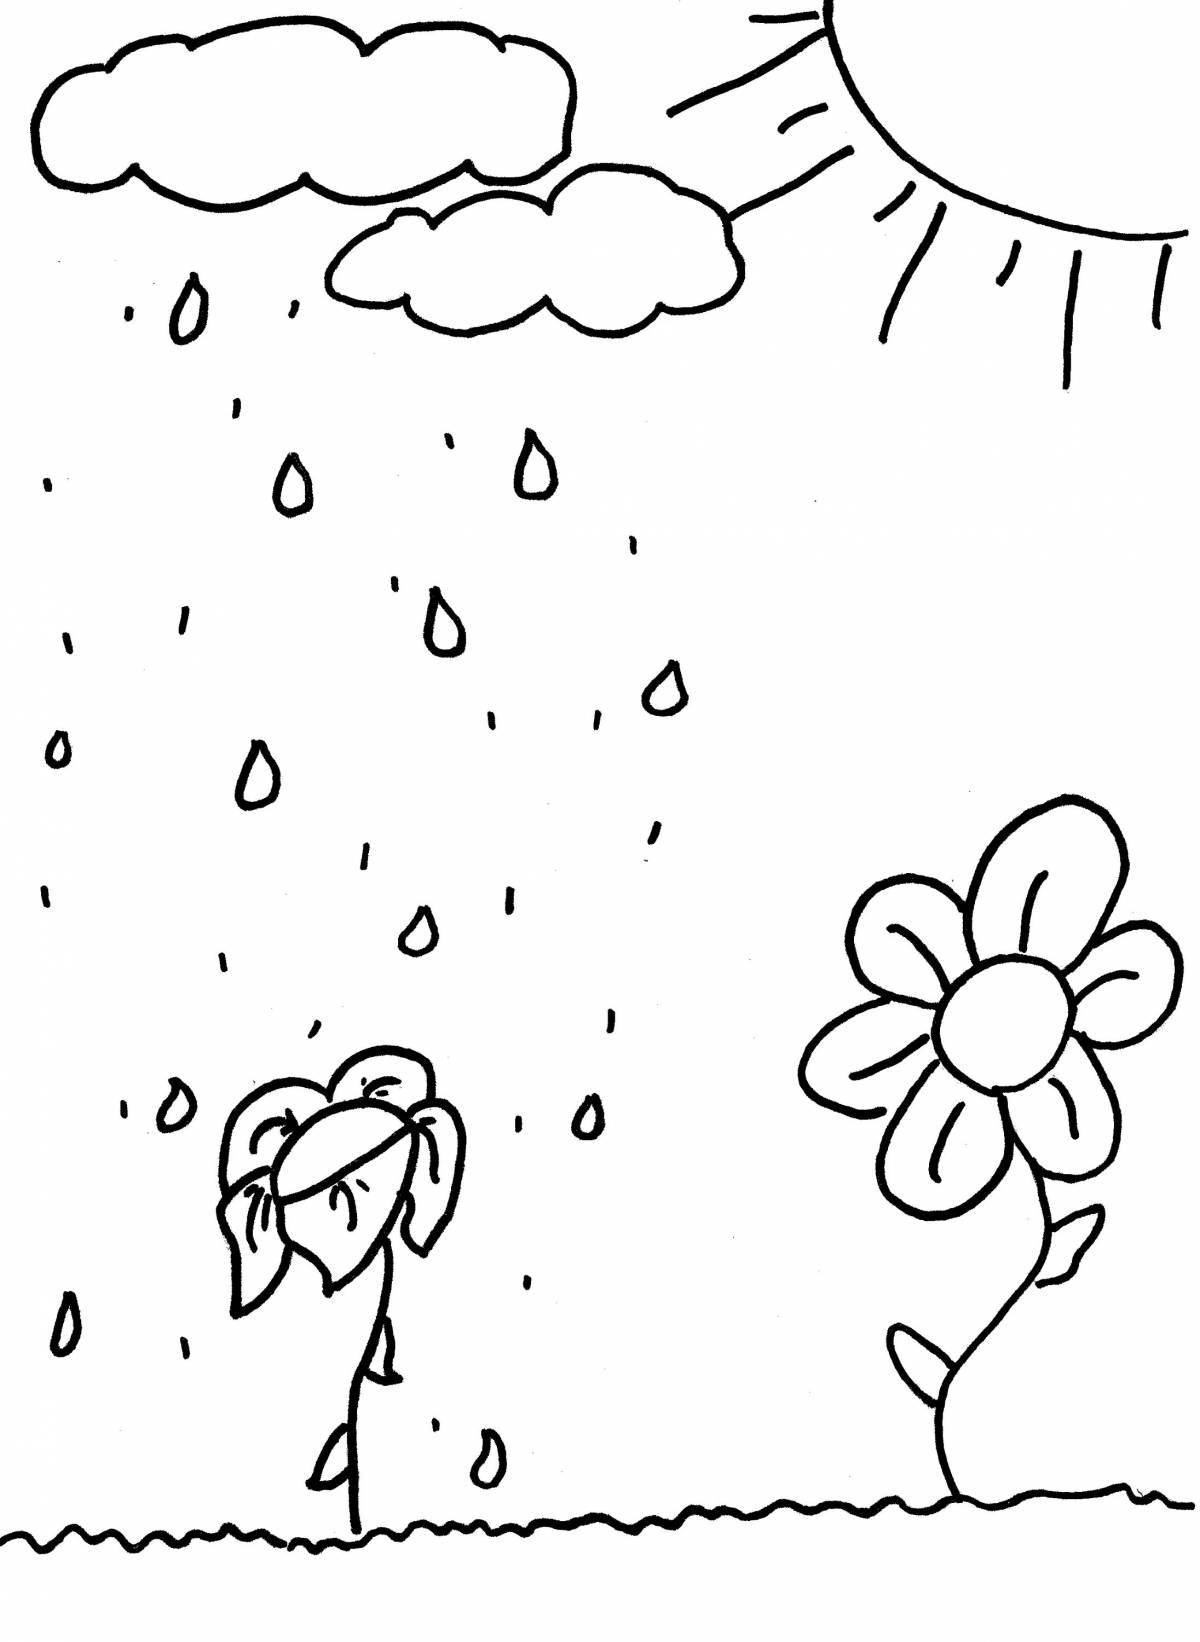 Shining rain coloring book for kids